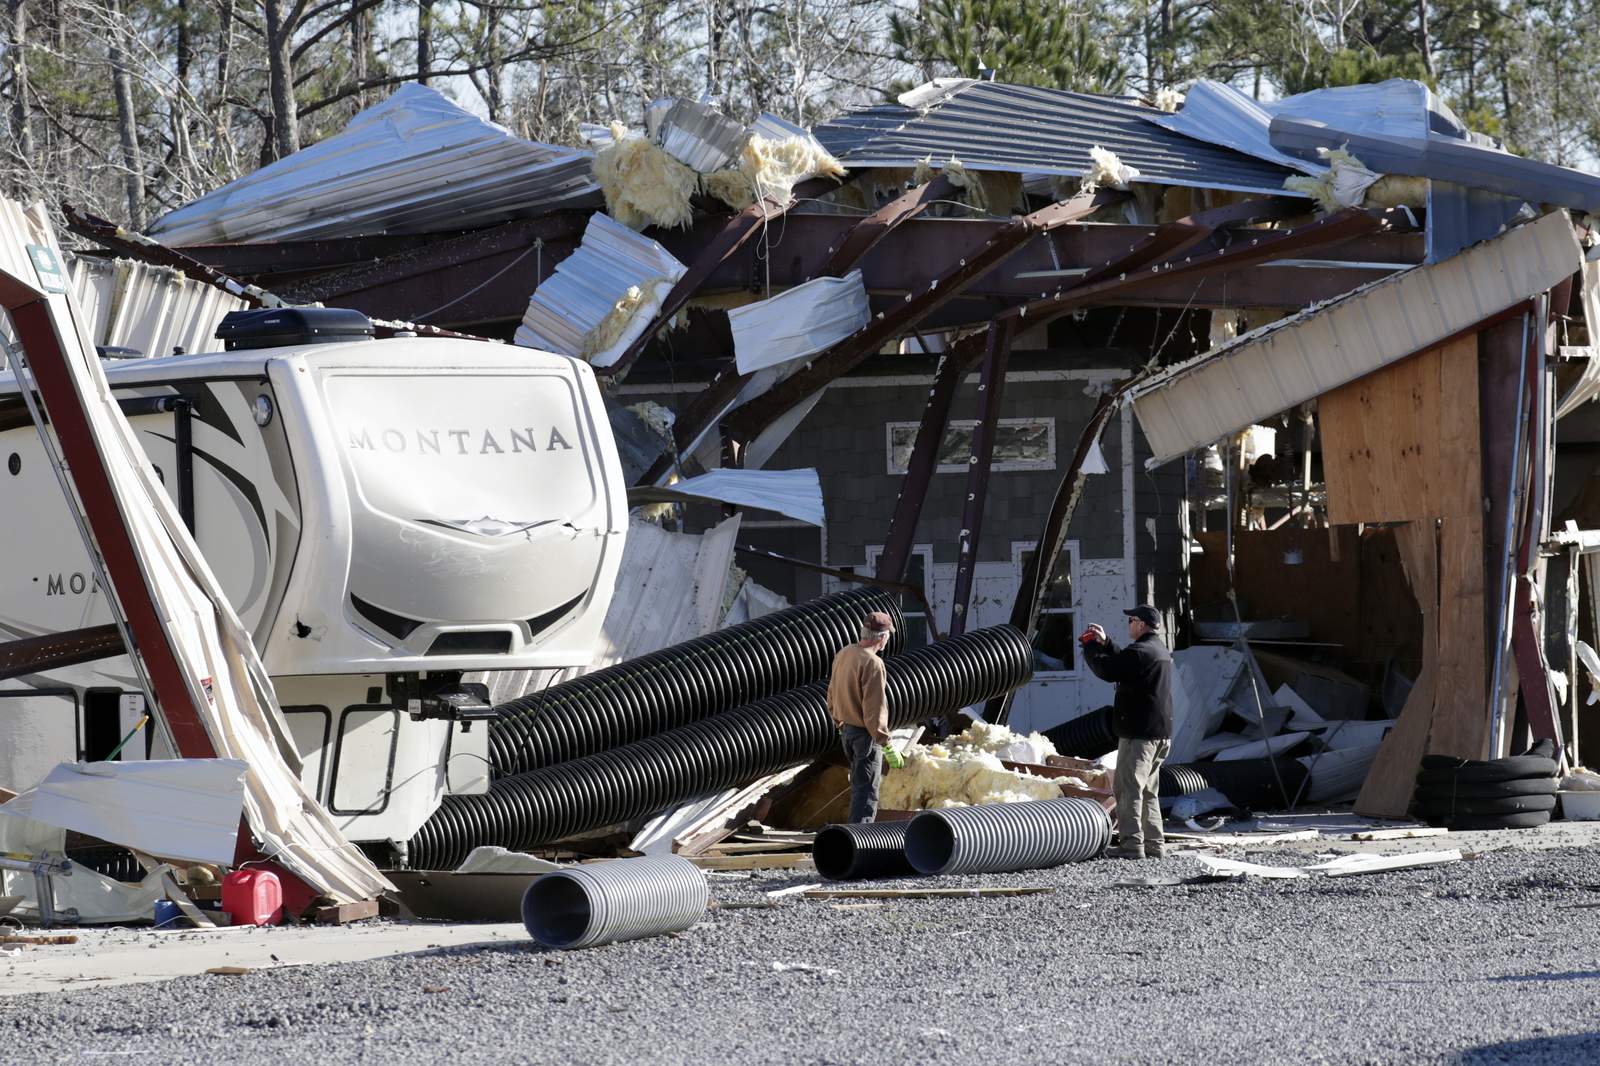 Cooper seeking improved warning system after deadly tornado